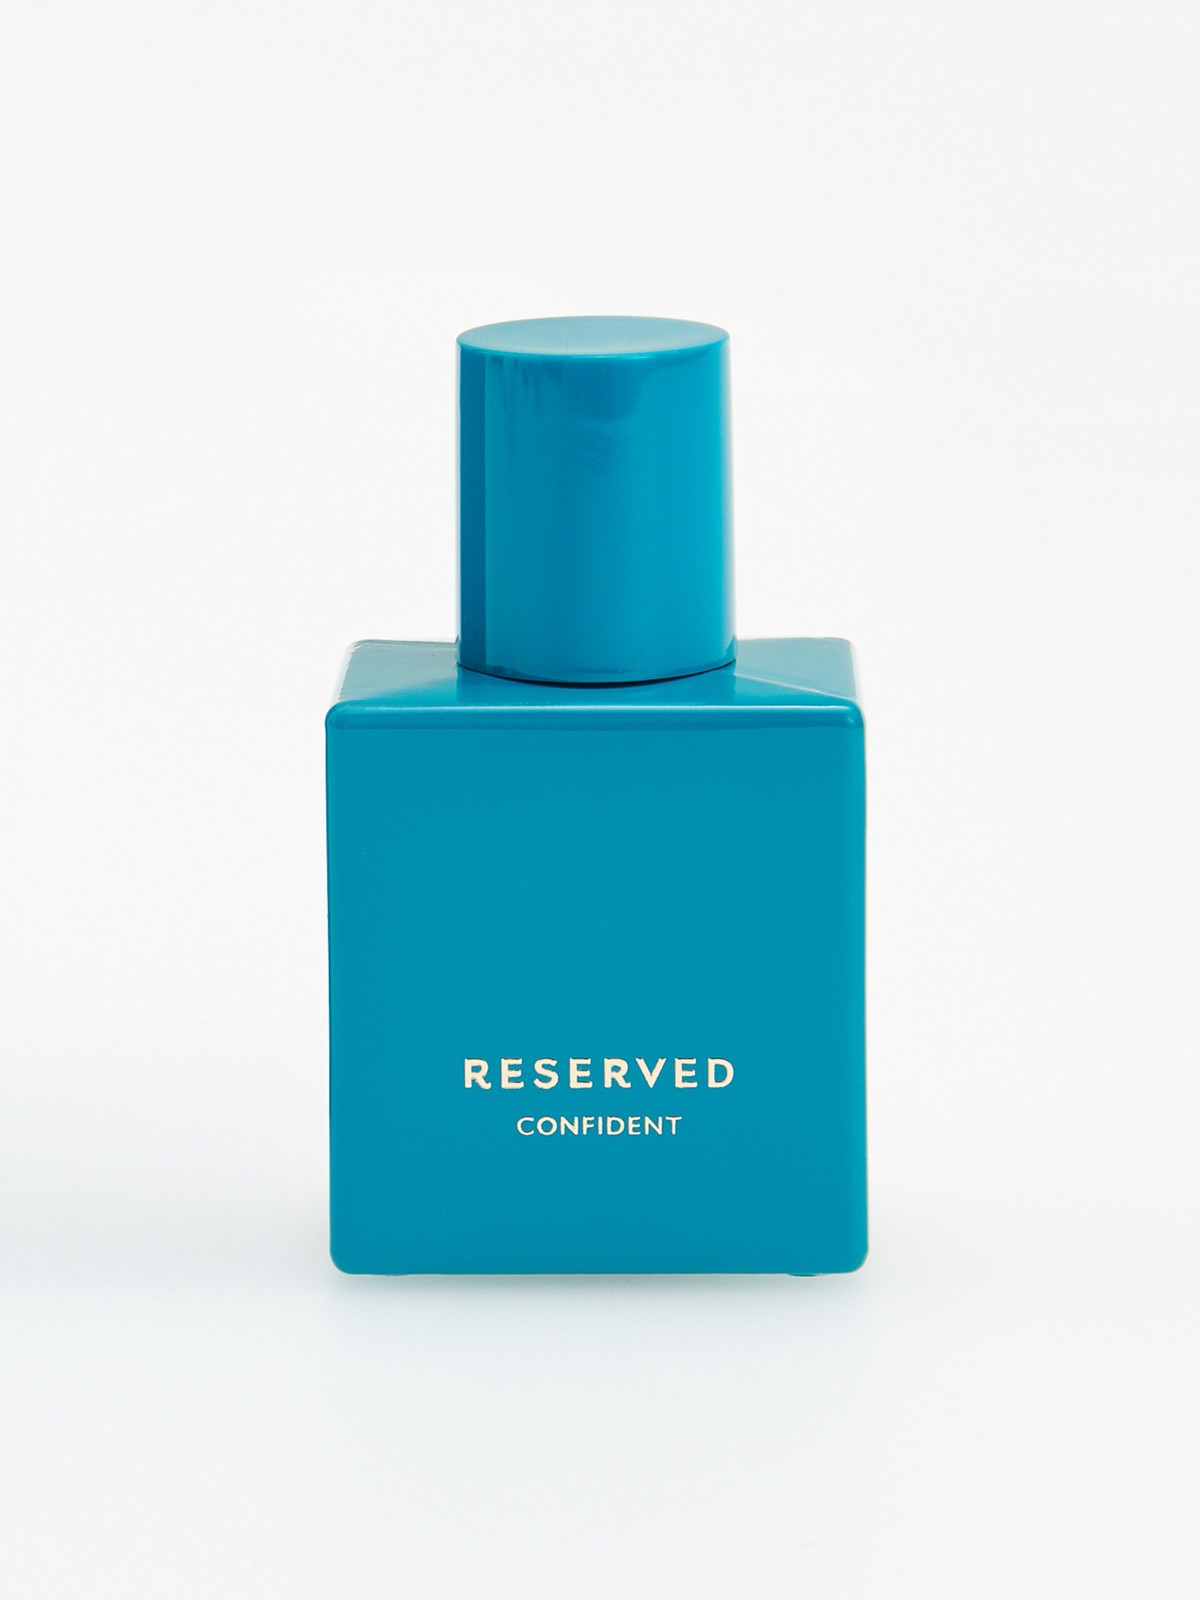 Reserved CONFIDENT parfümvíz fotója